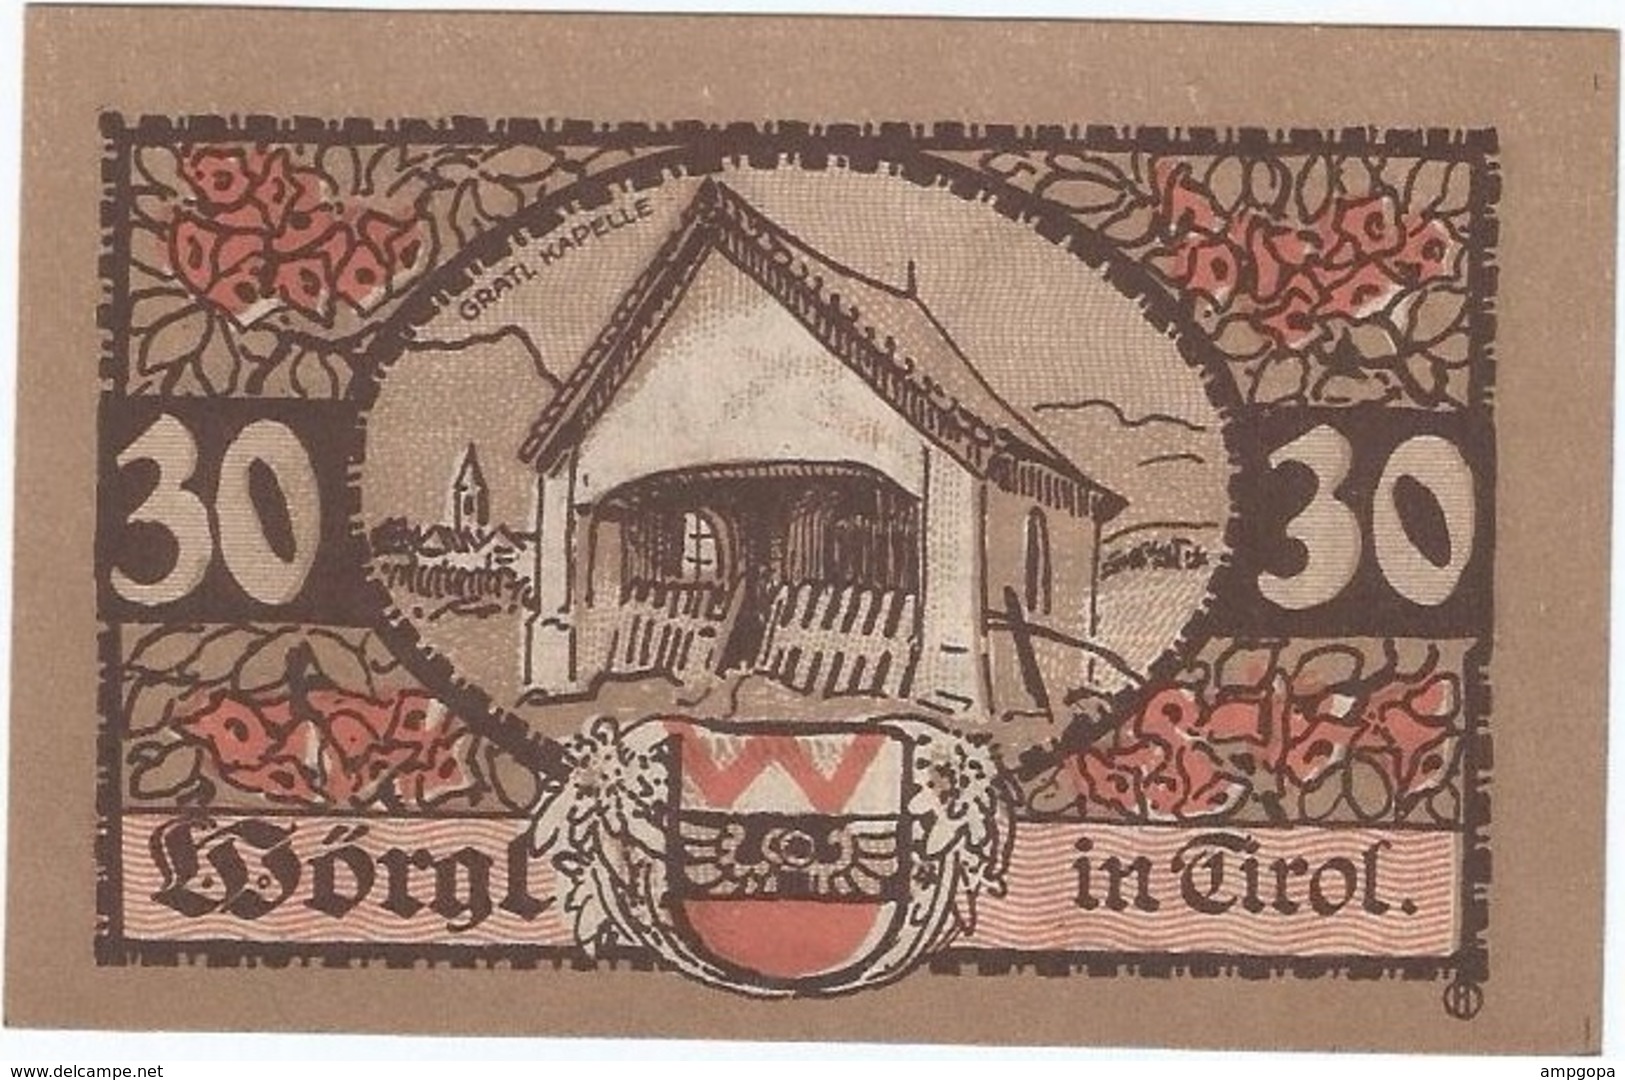 Austria 30 Heller 31-12-1920, Worgl (Tirol) UNC - Austria